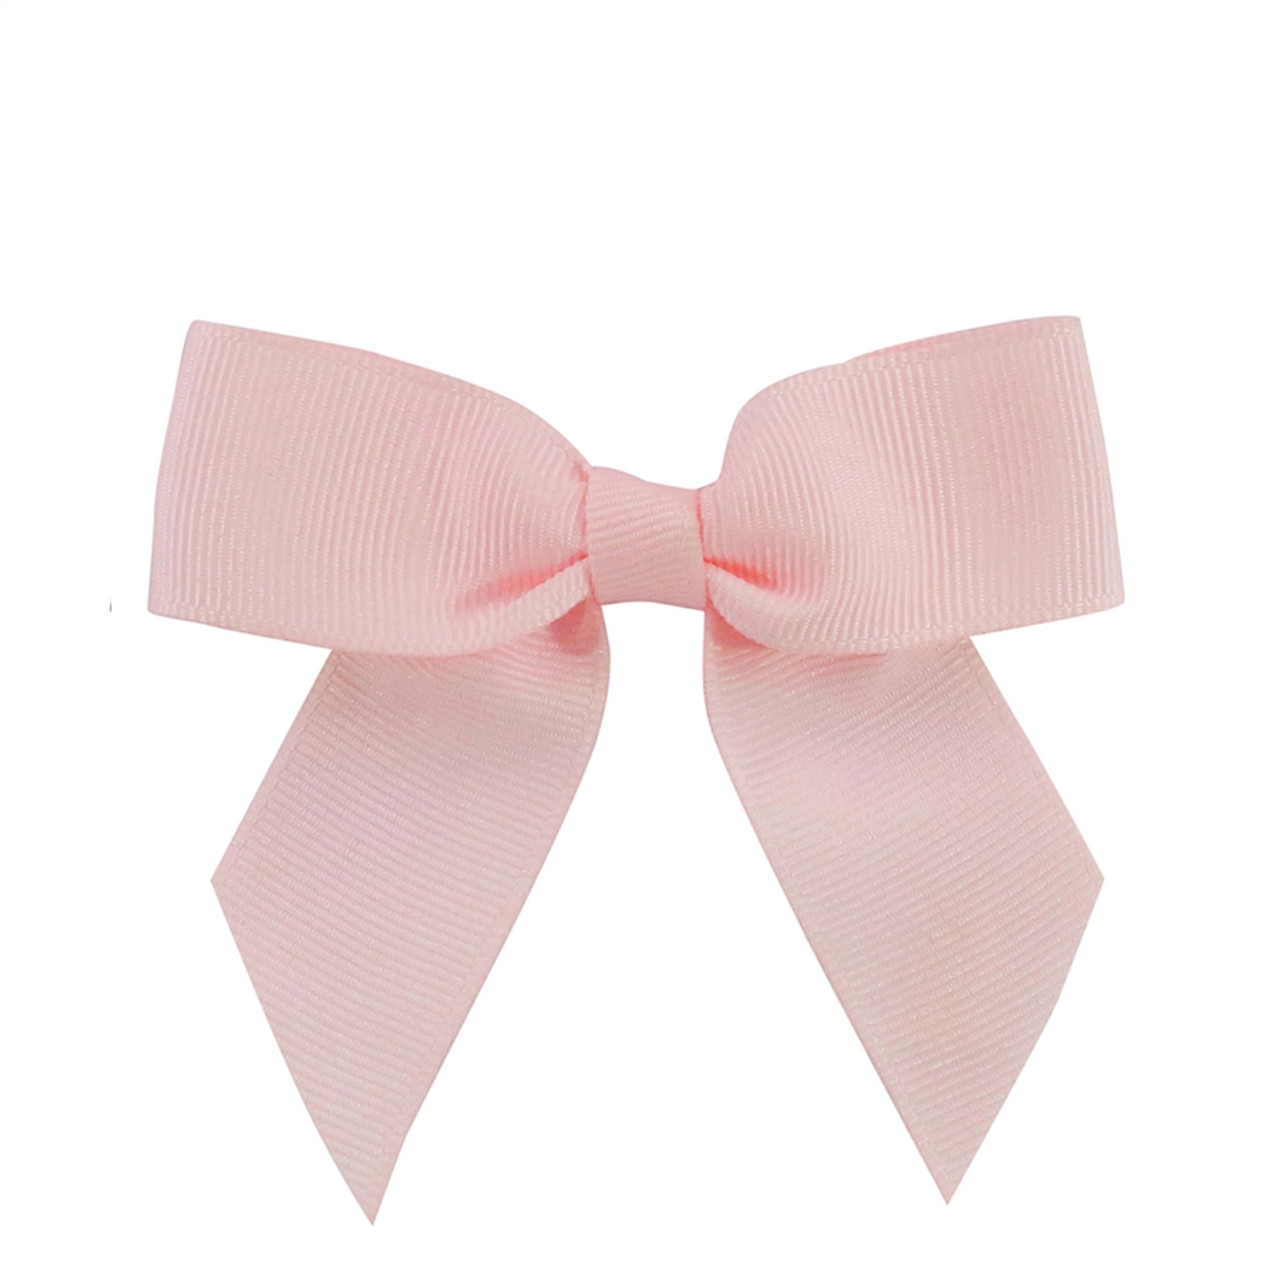 Ribbon Bow 4 1/2 x 3 Pearl Pink - 6 Pack (114mm x 76mm